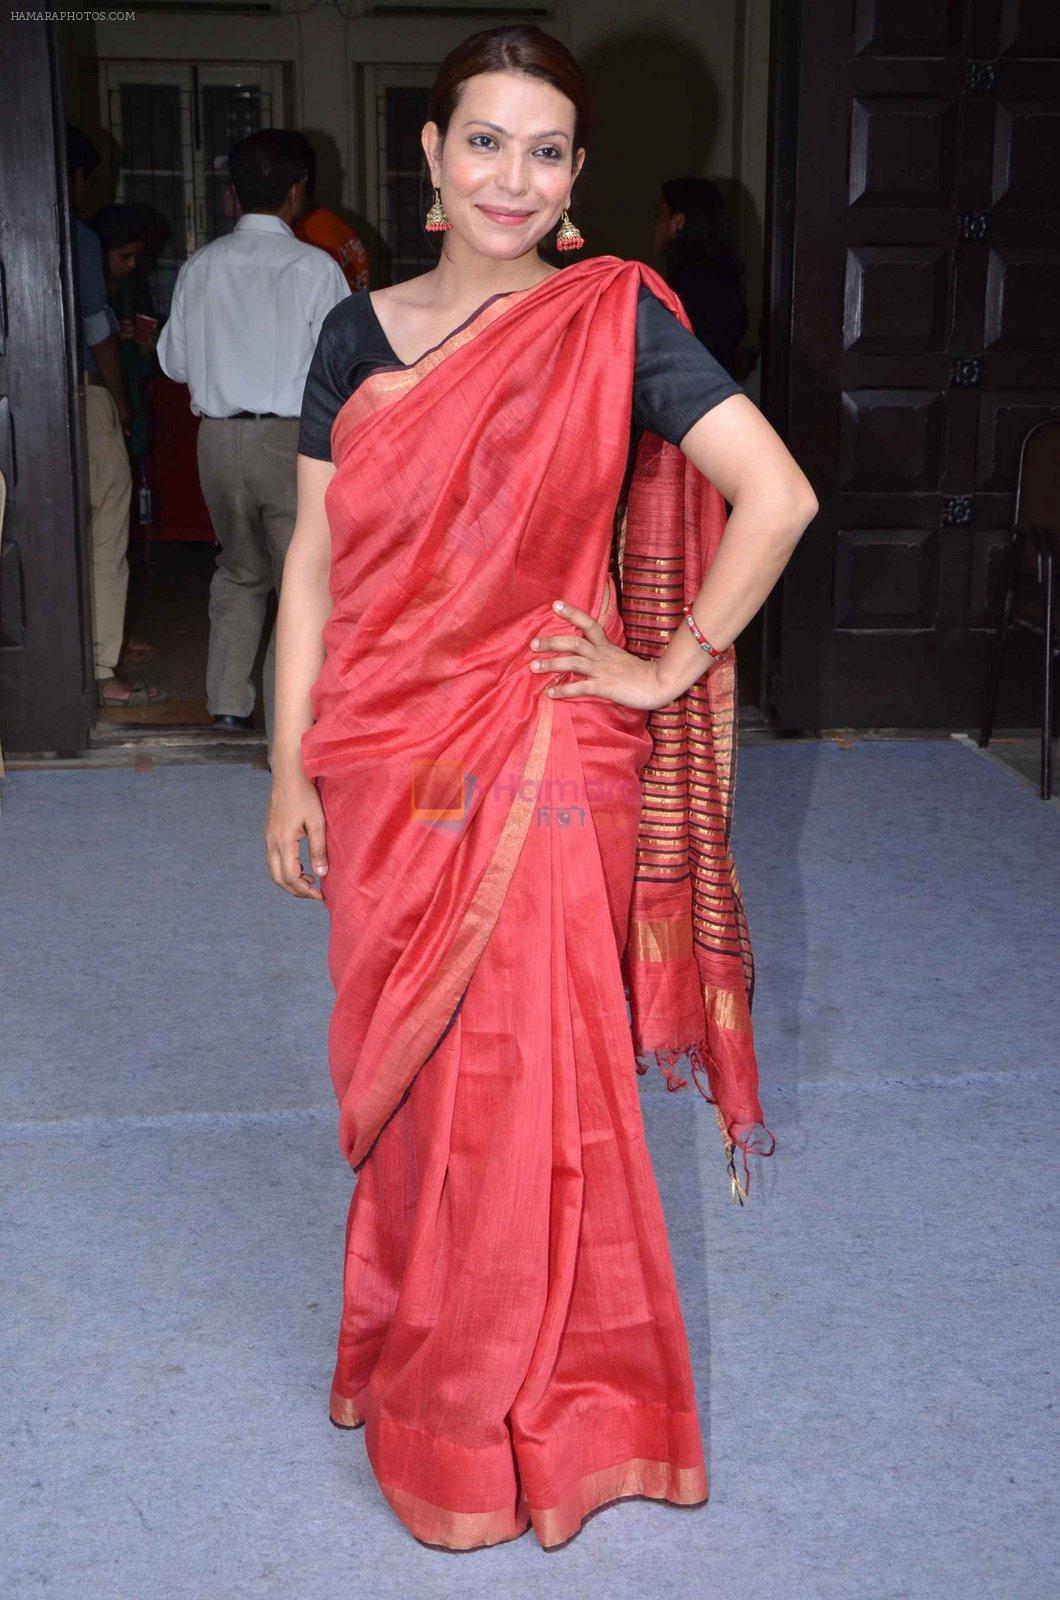 Shilpa Shukla at Litofest in Mumbai on 21st Feb 2016